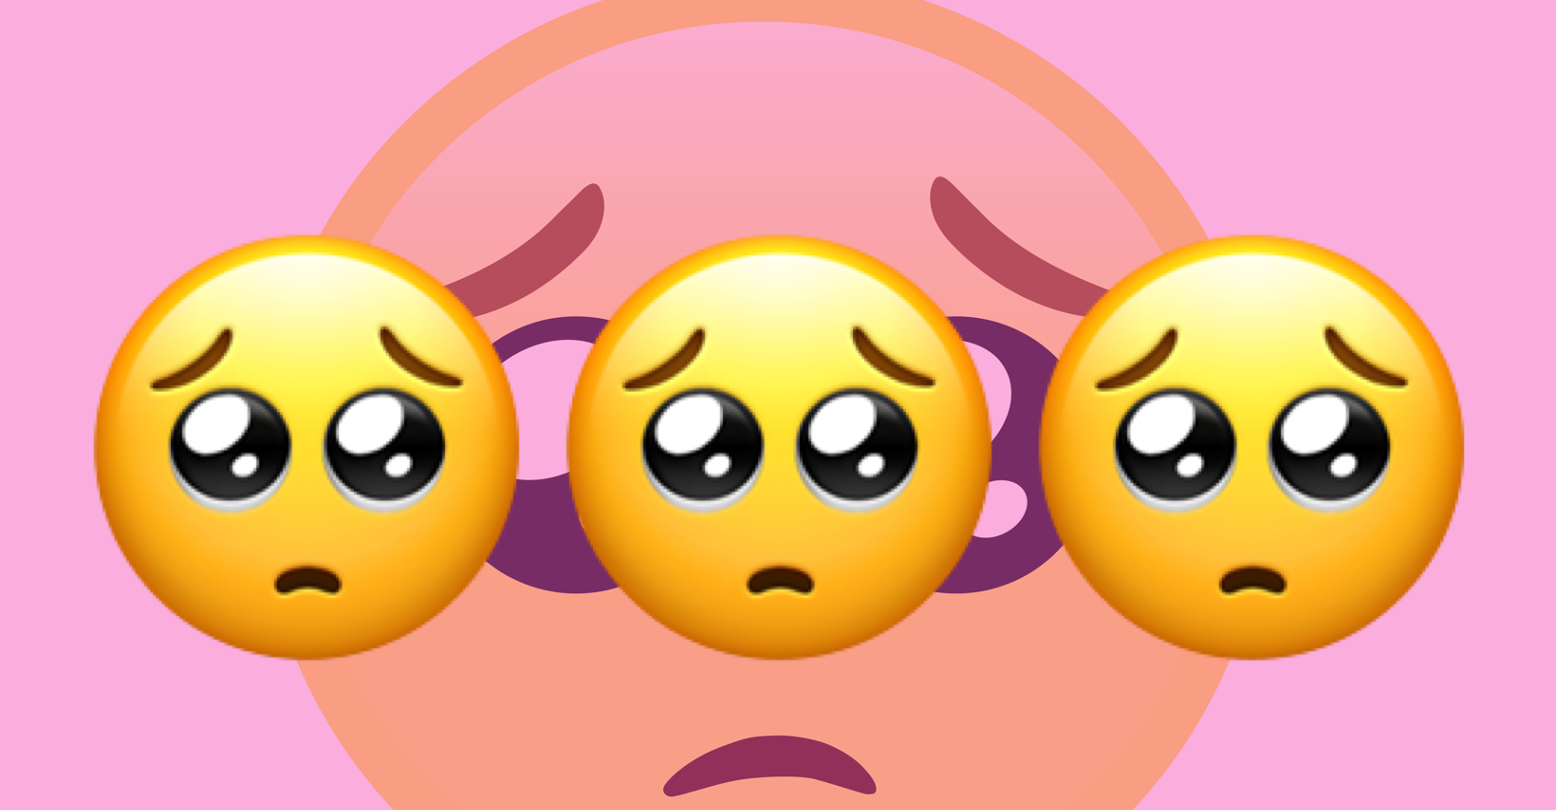 Pleading Face Emojis